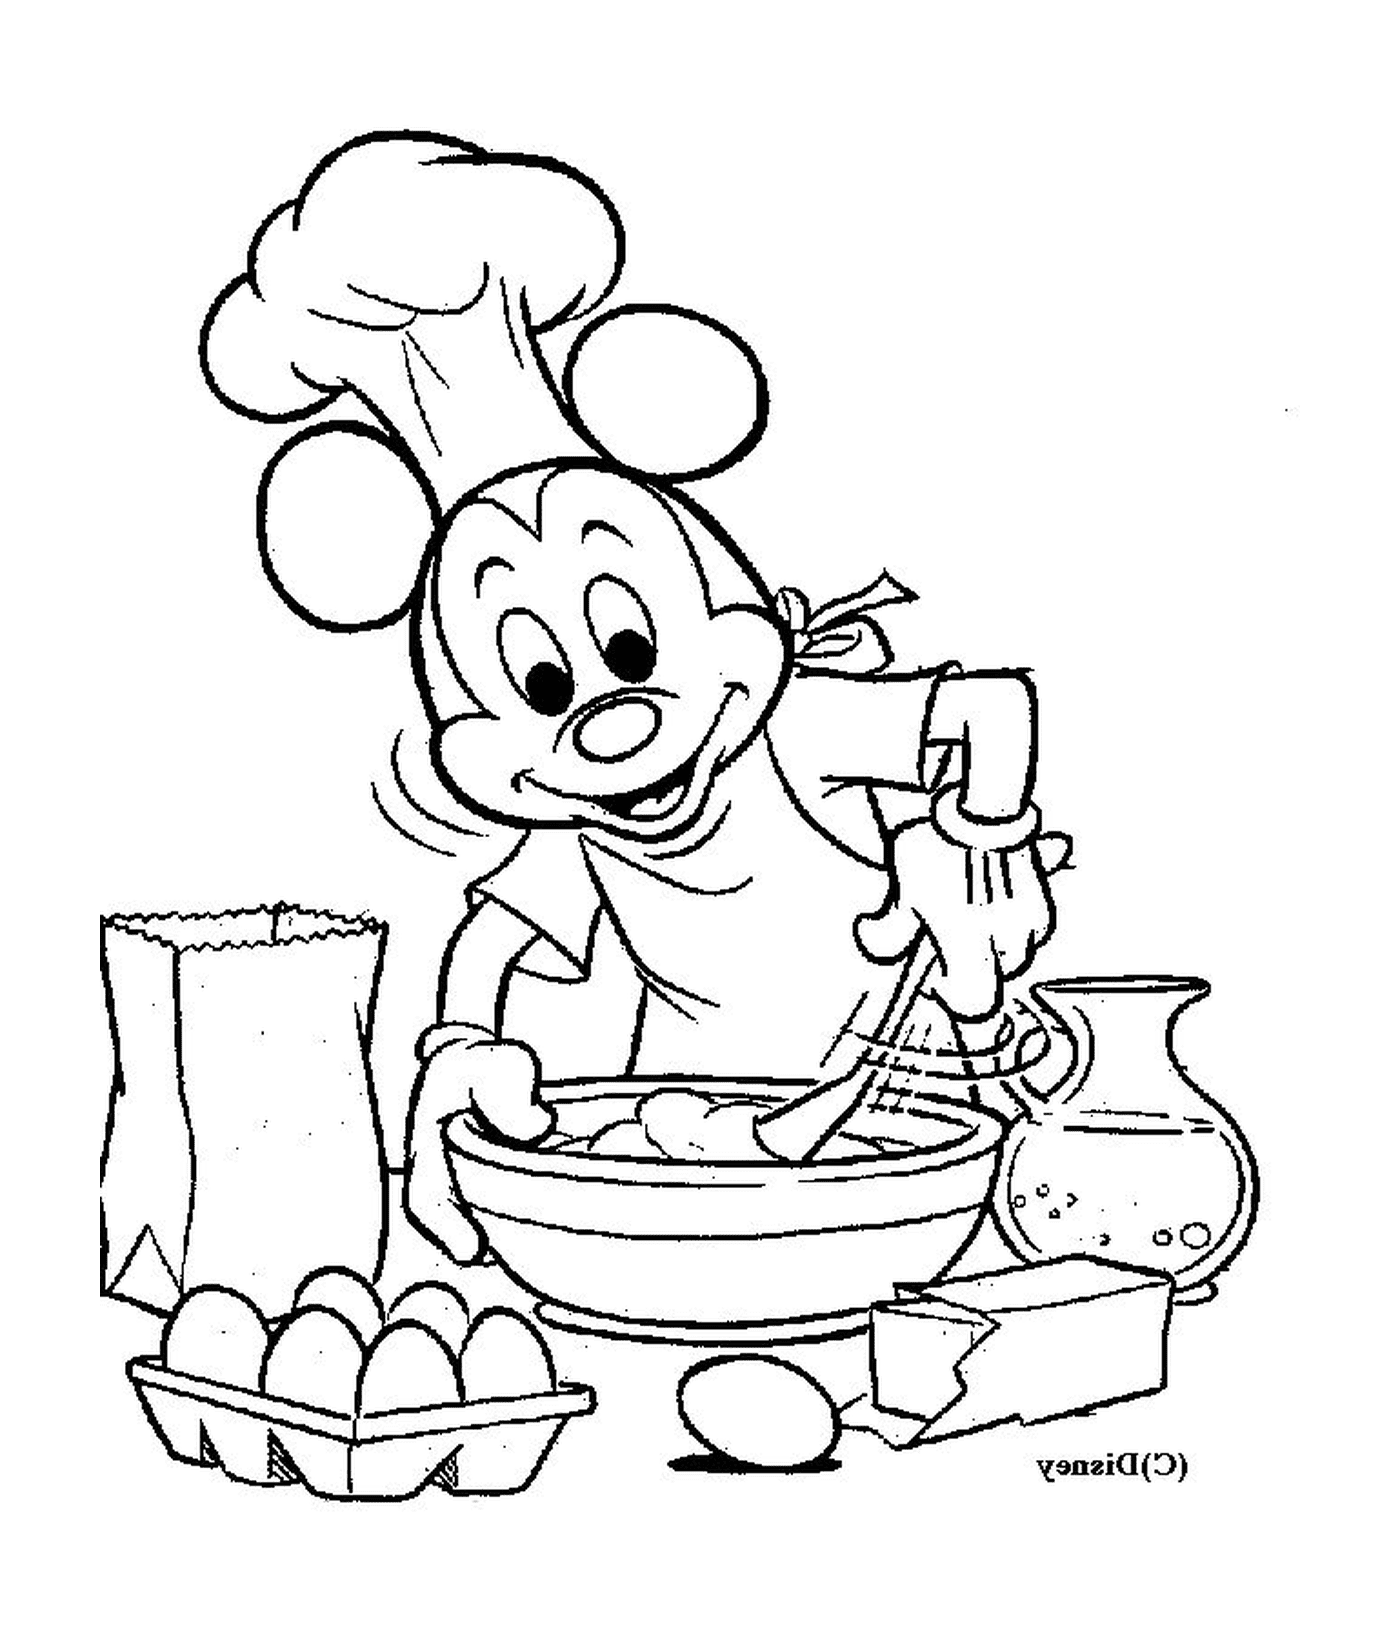  Mickey Mouse chef mezclando un tazón de comida 